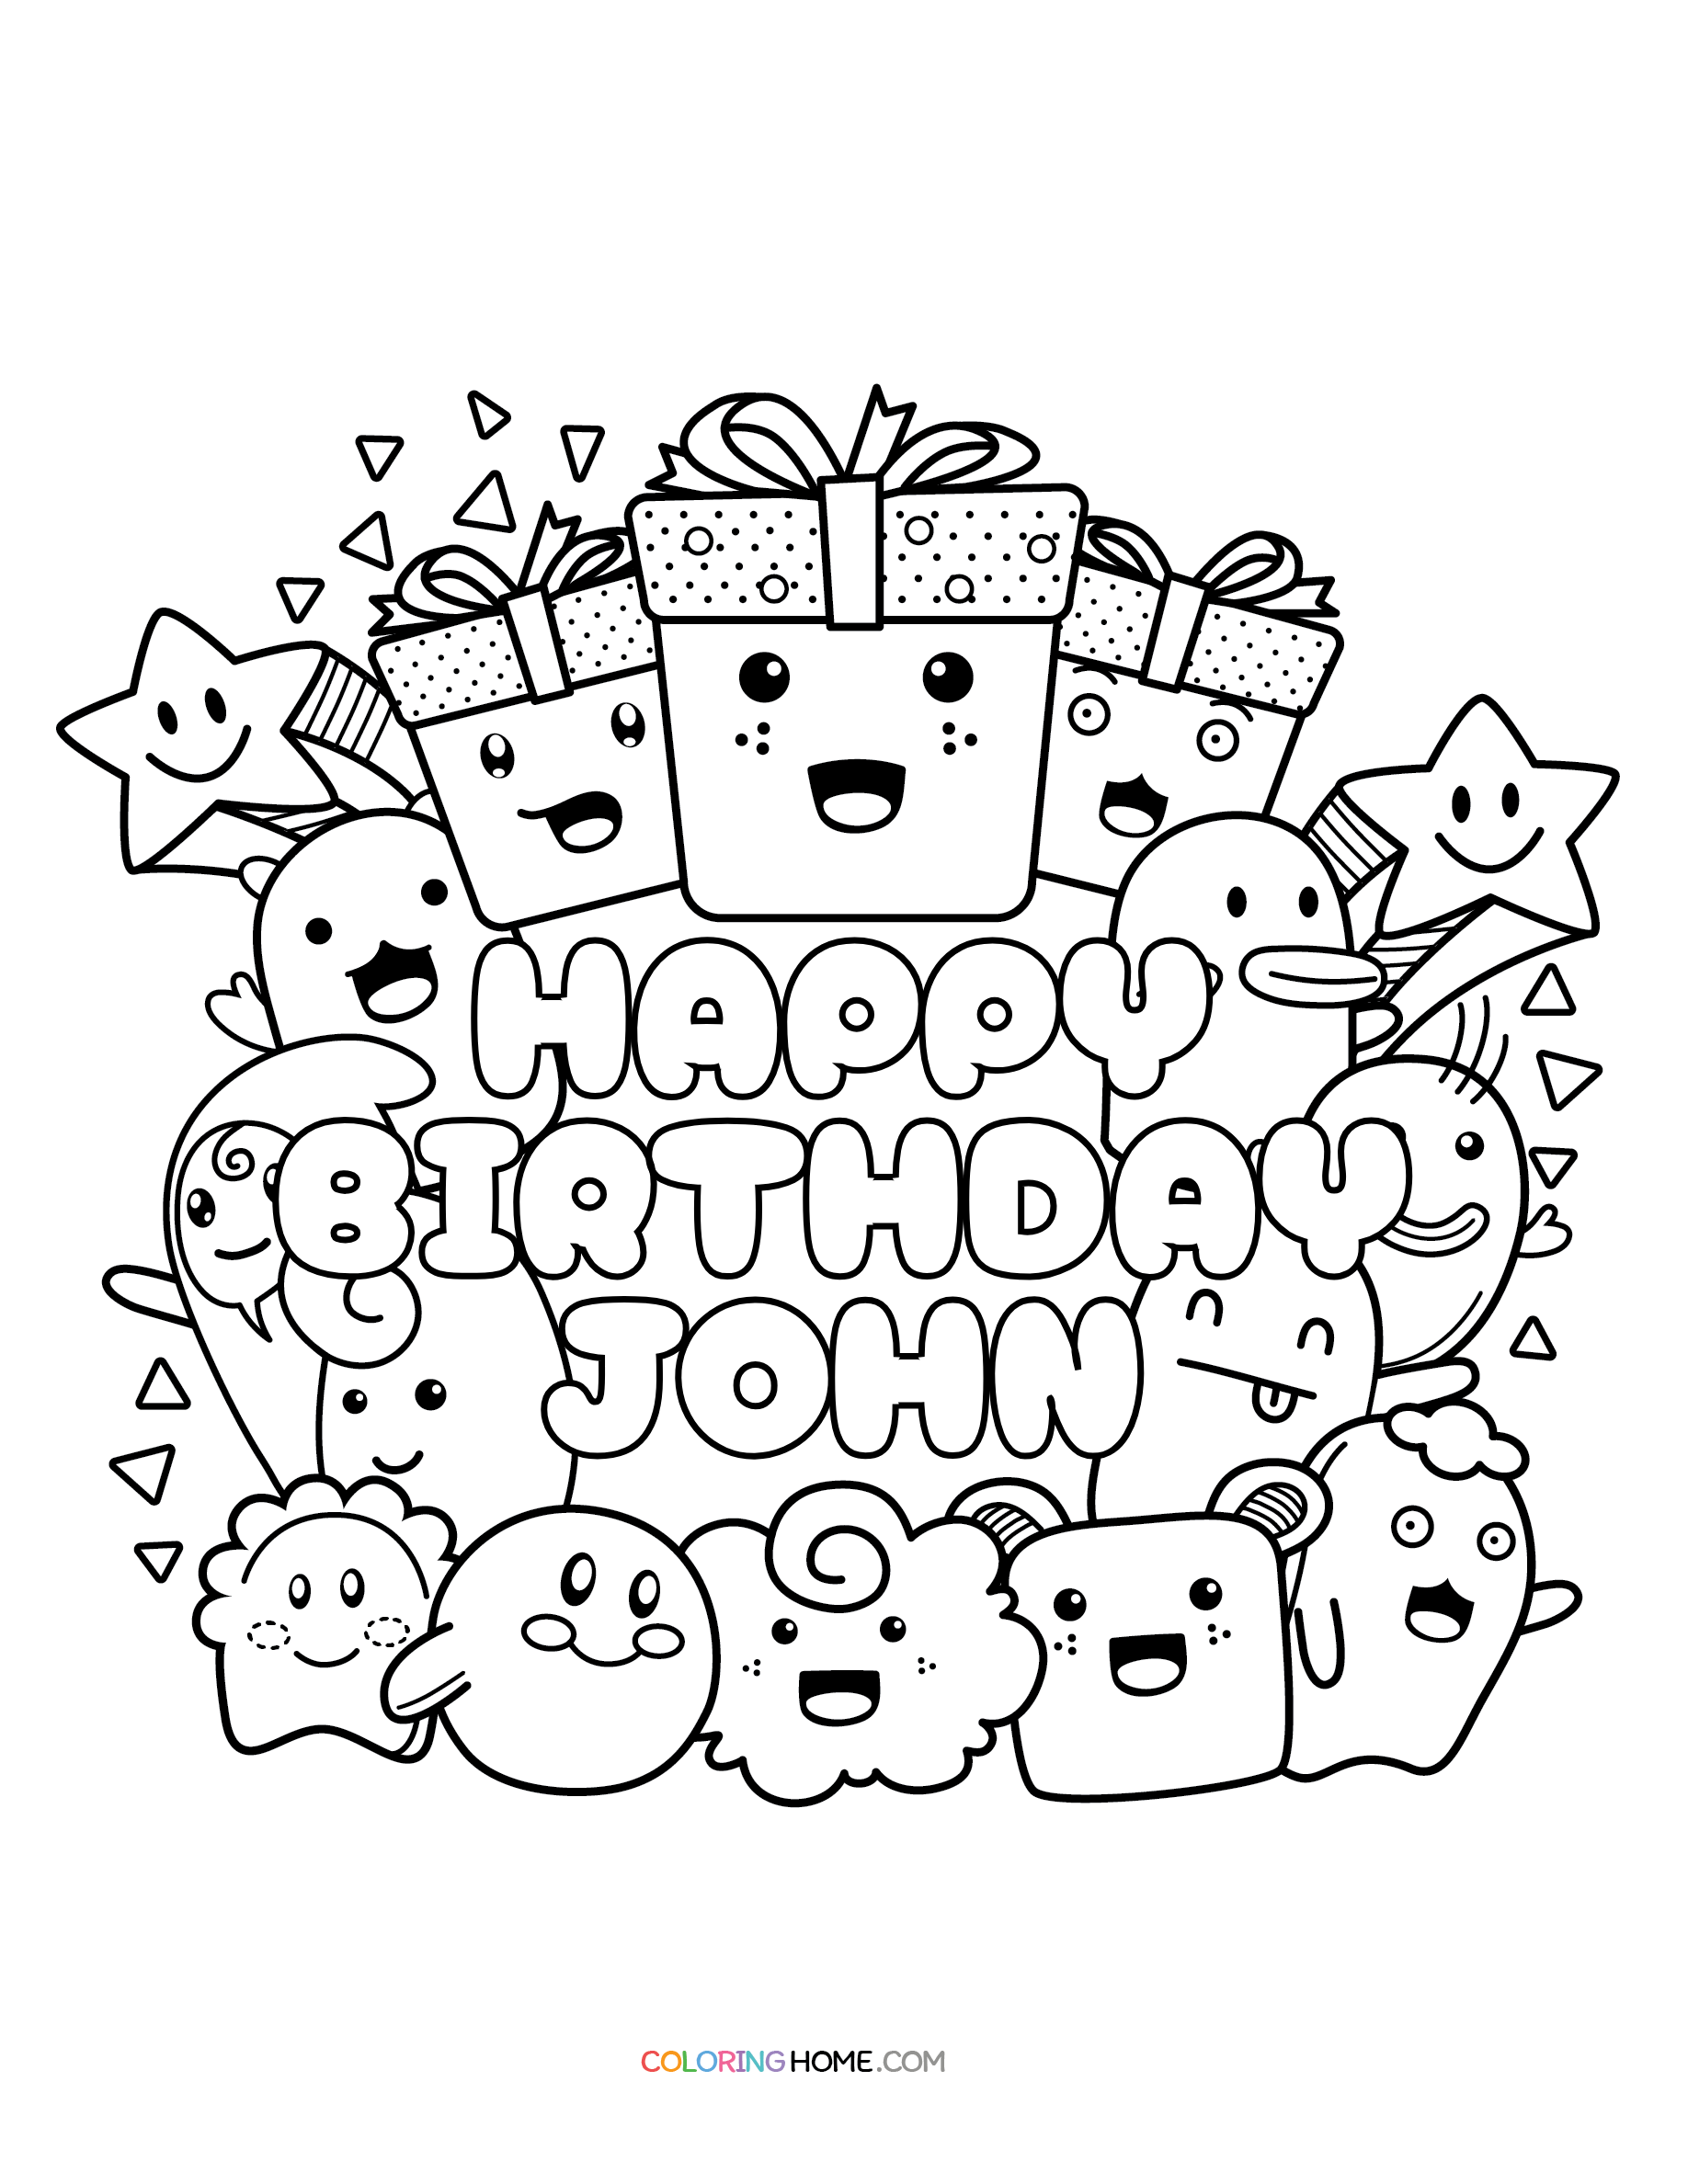 Happy Birthday John coloring page